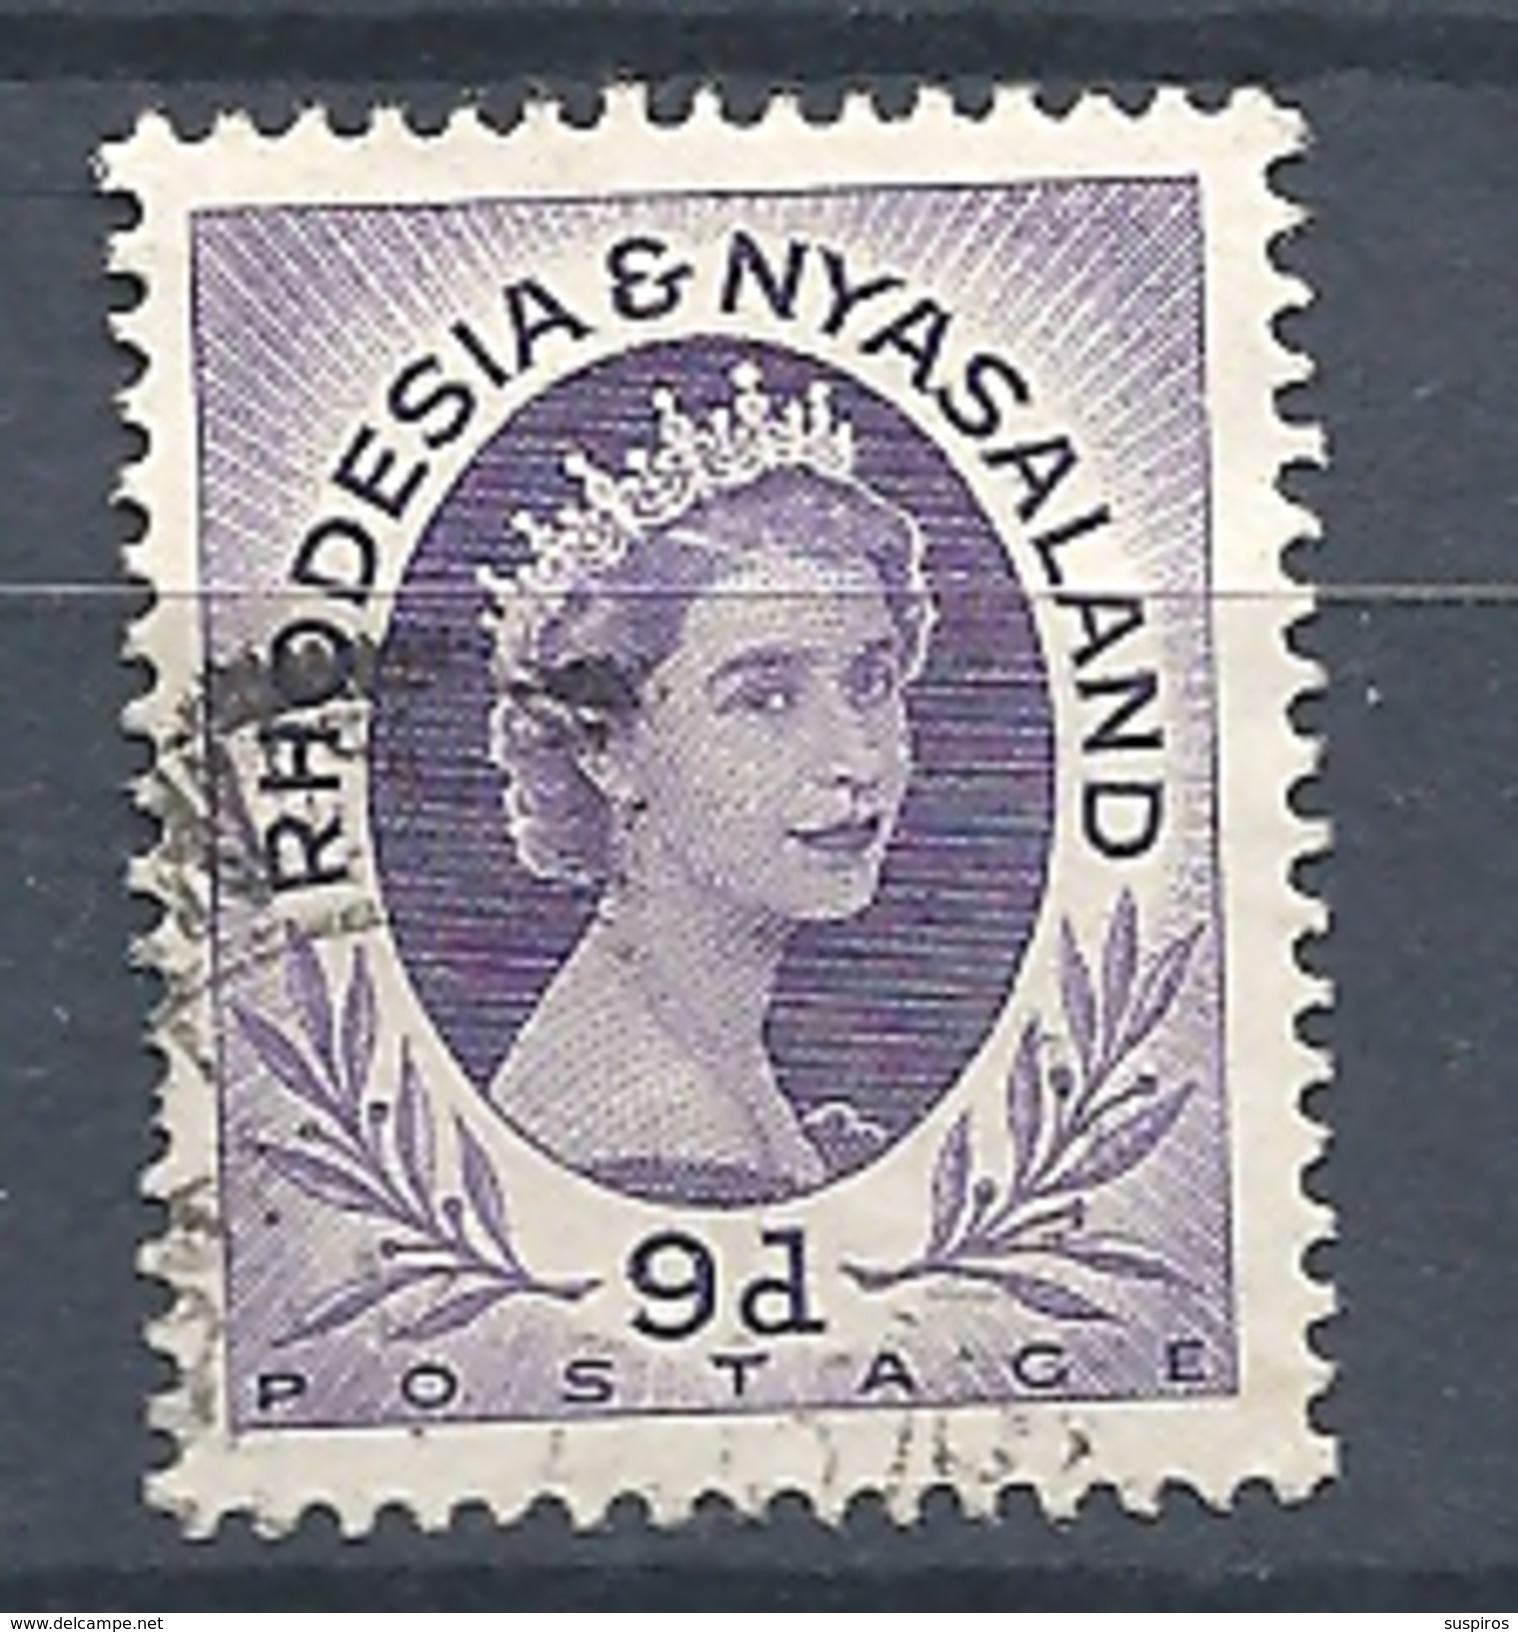 RHODESIA & NYASALAND 1954 Queen Elizabeth II USED - Rhodesia & Nyasaland (1954-1963)